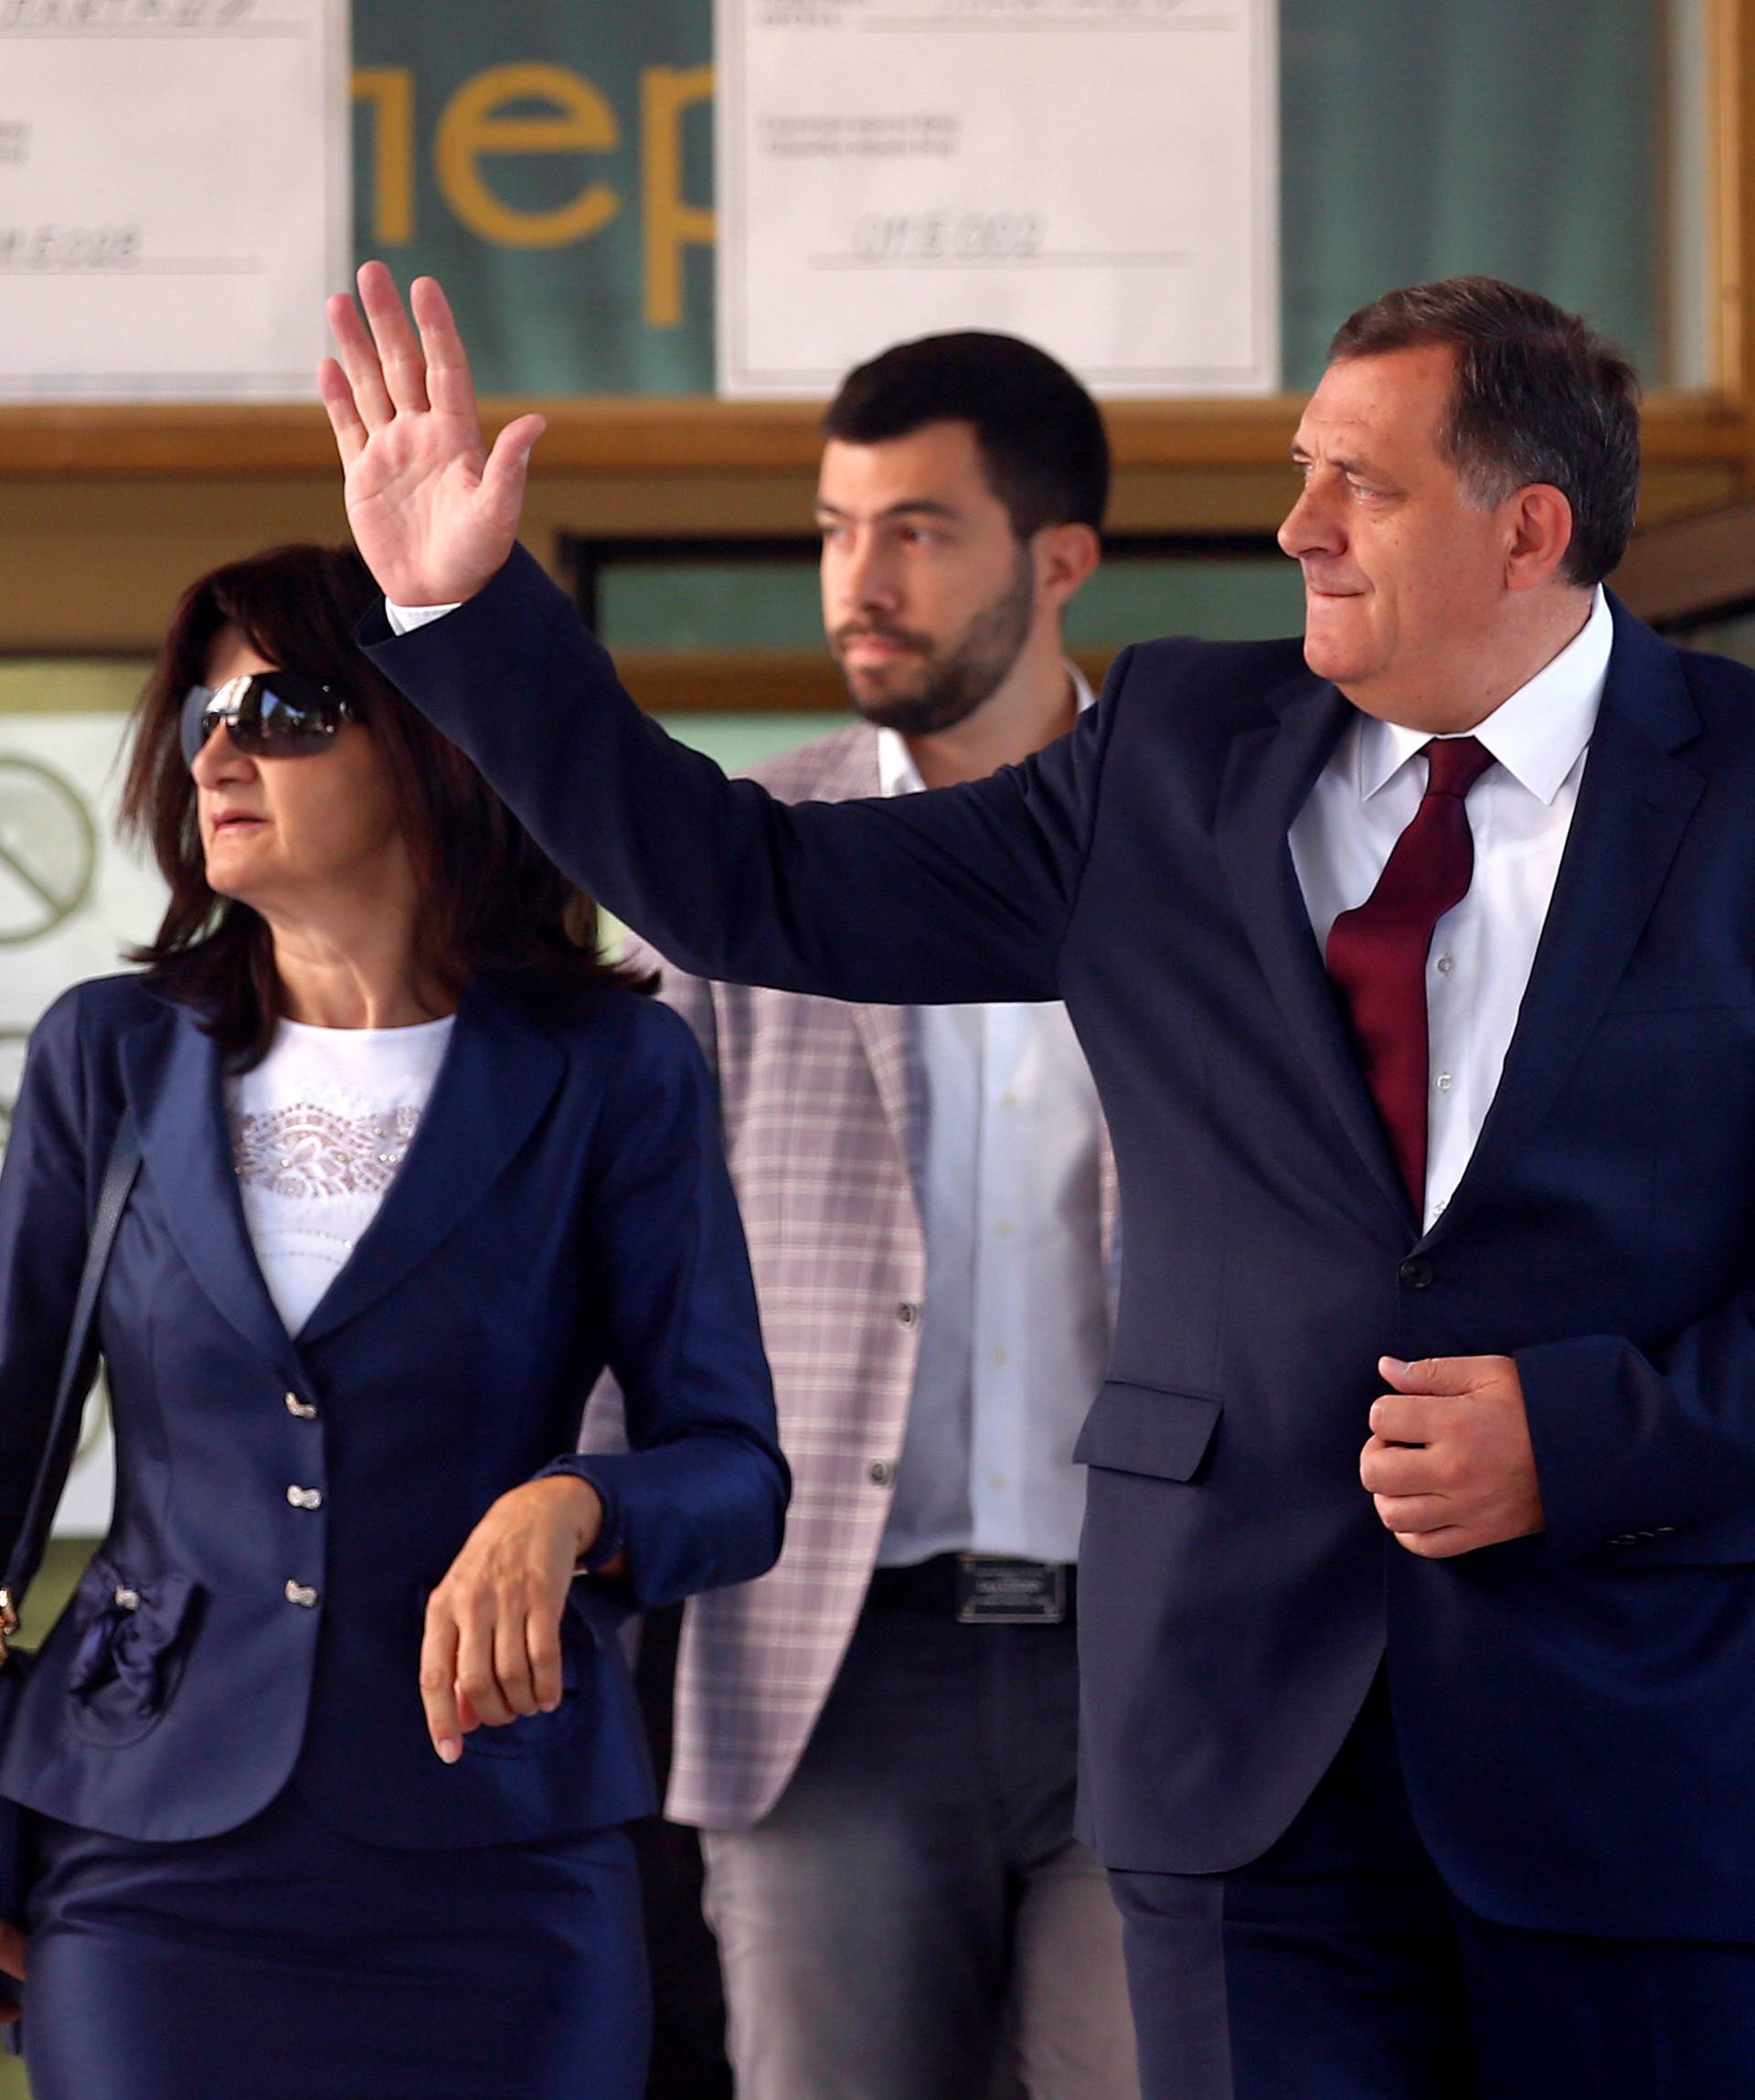 Milorad Dodik, President of Republika Srpska, his wife Snjezana and son Igor leave after voting for a referendum on their Statehood Day in Laktasi near Banja Luka